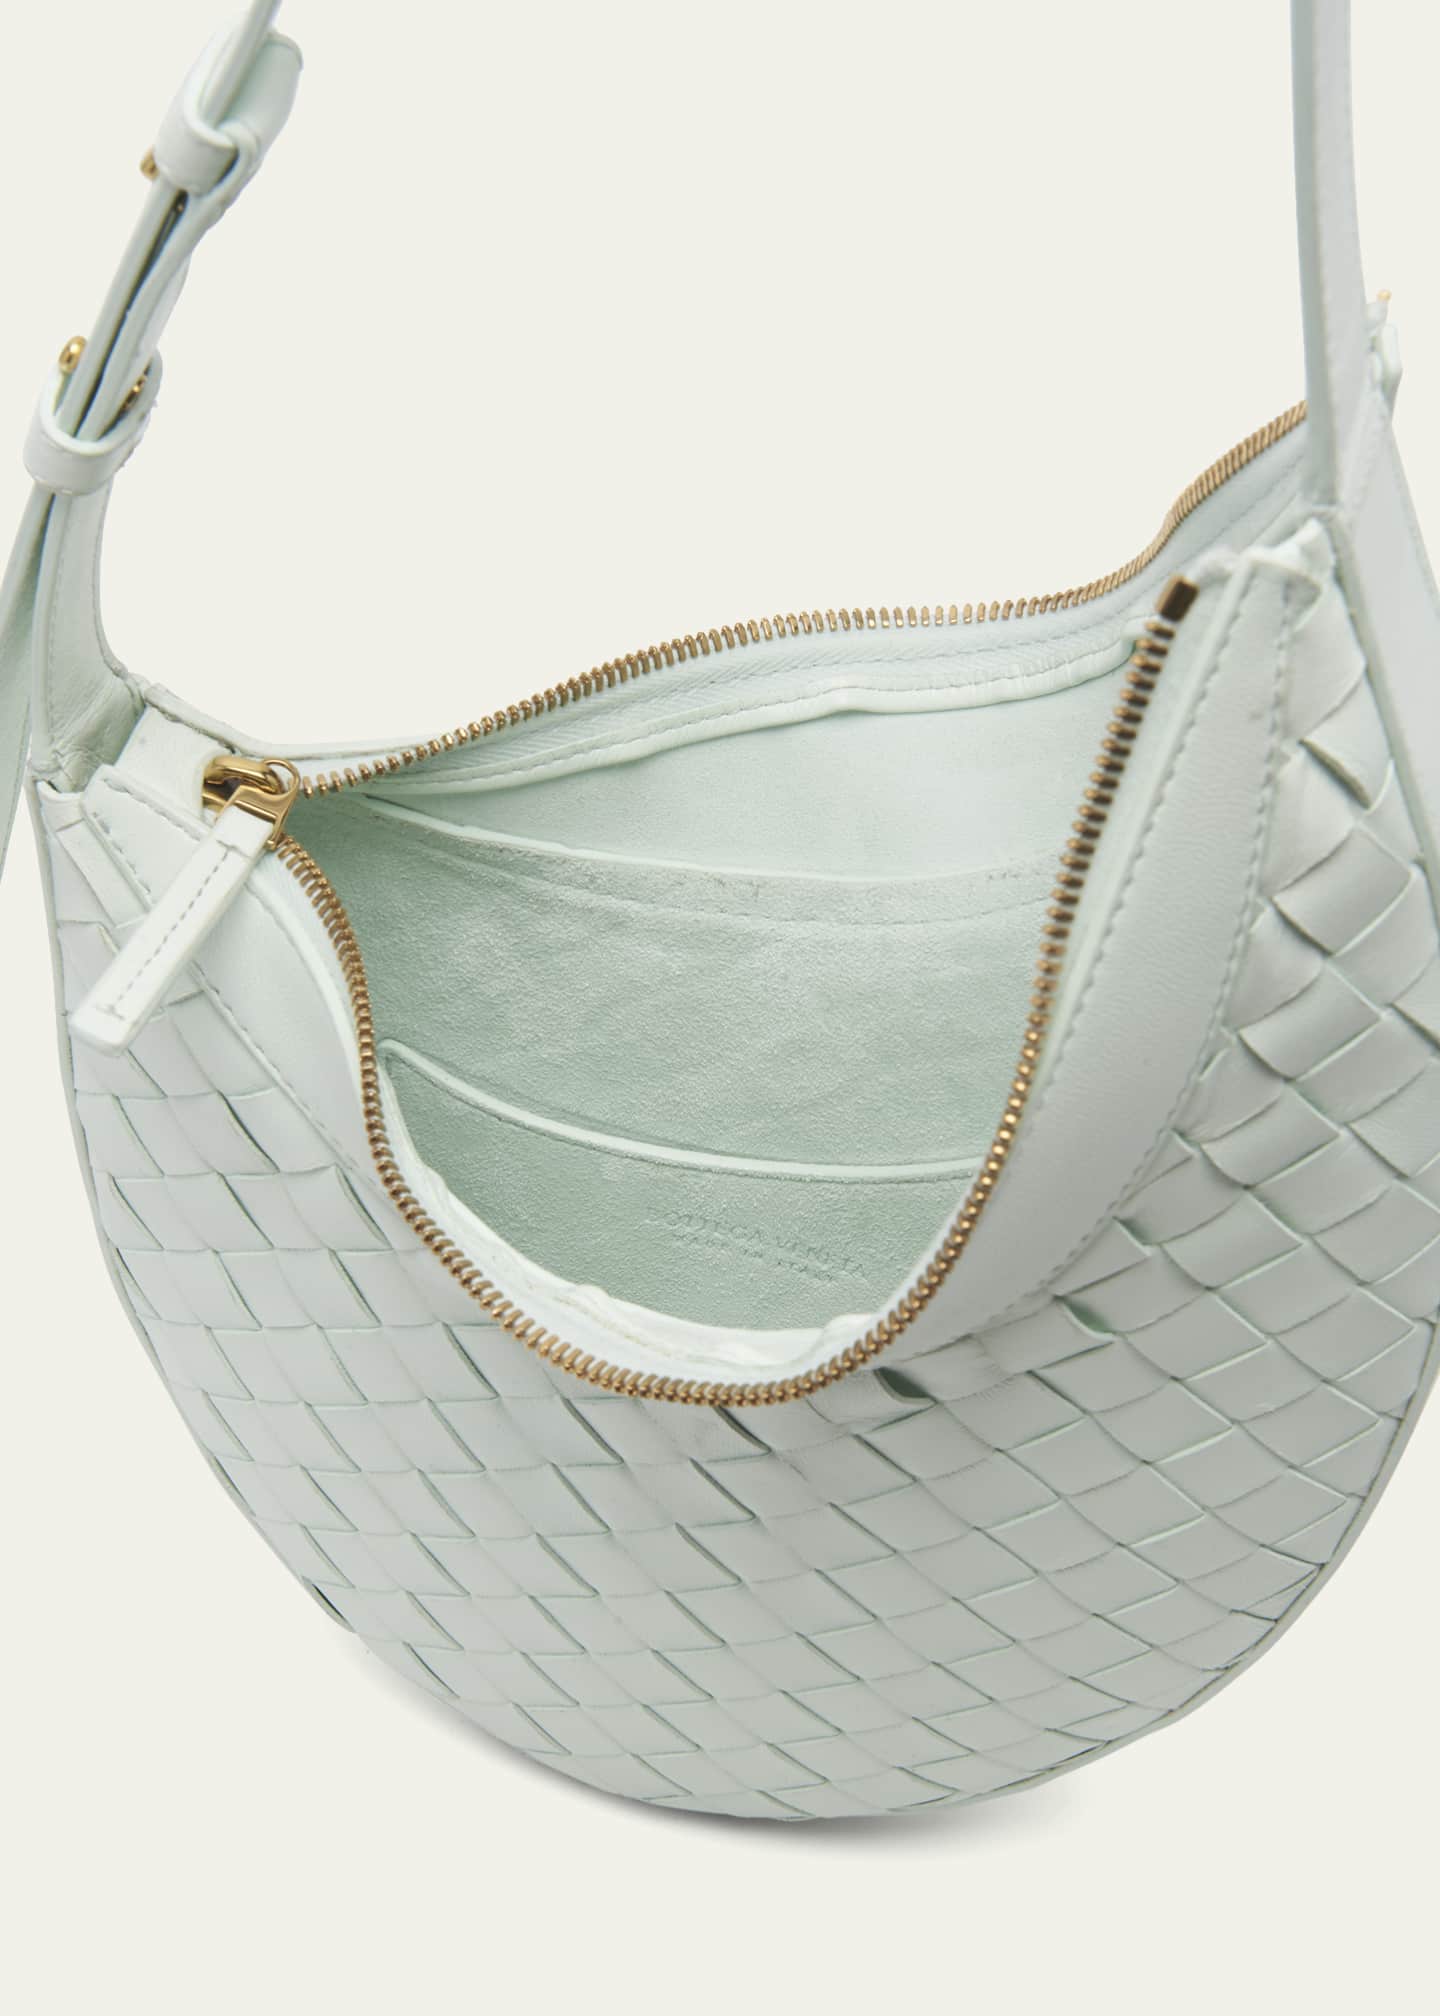 Bottega Veneta Small Intrecciato Leather Shoulder Bag in White